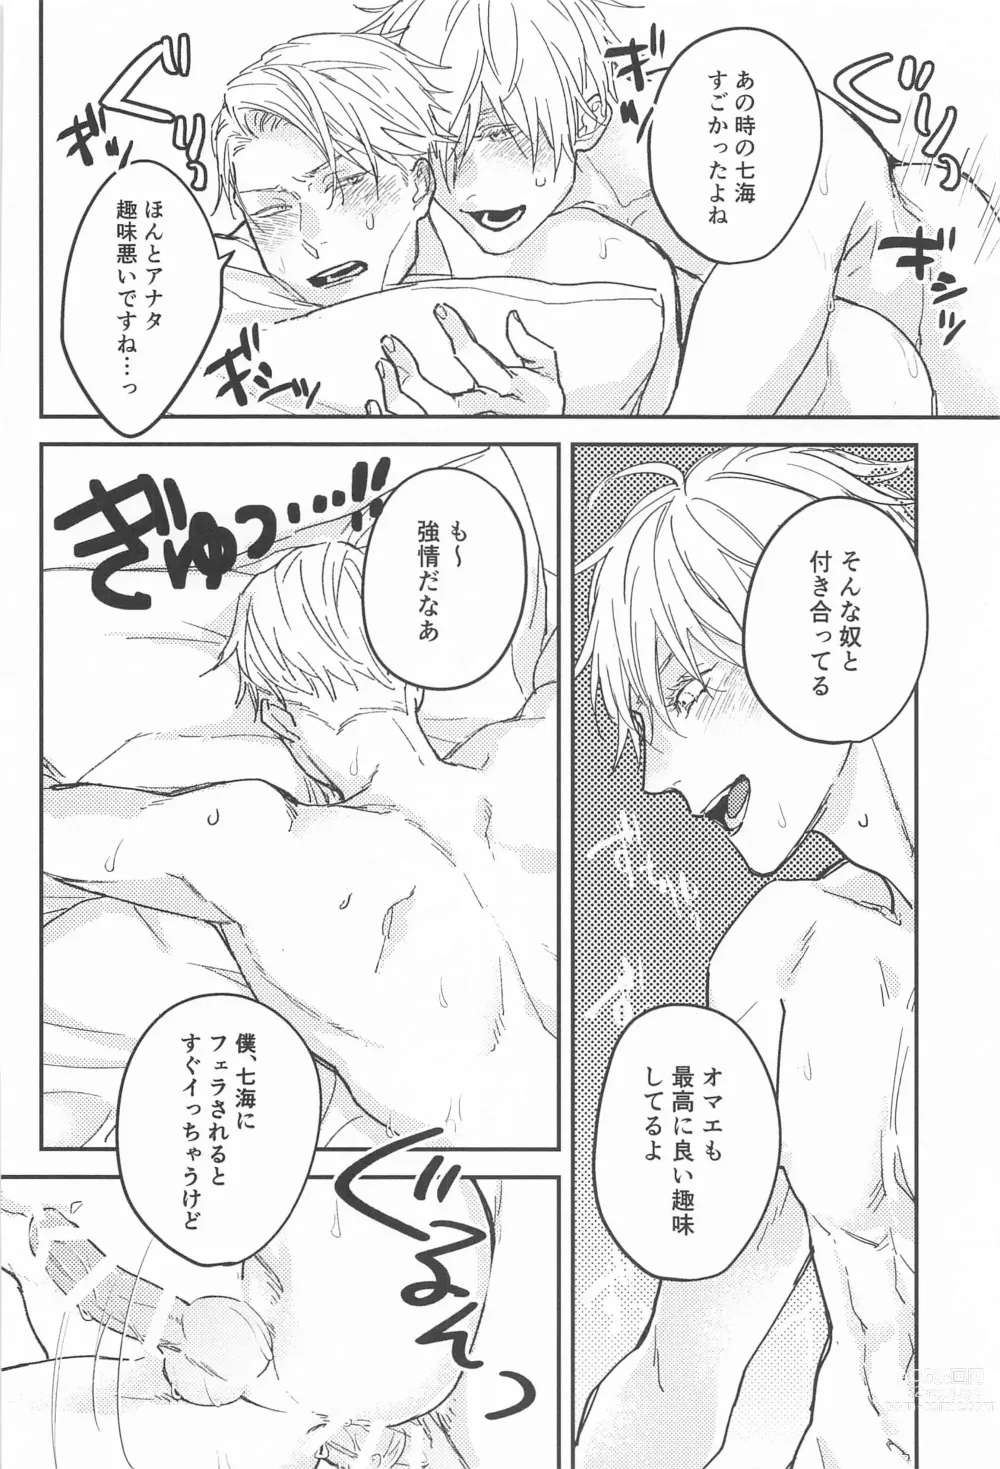 Page 19 of doujinshi 10years